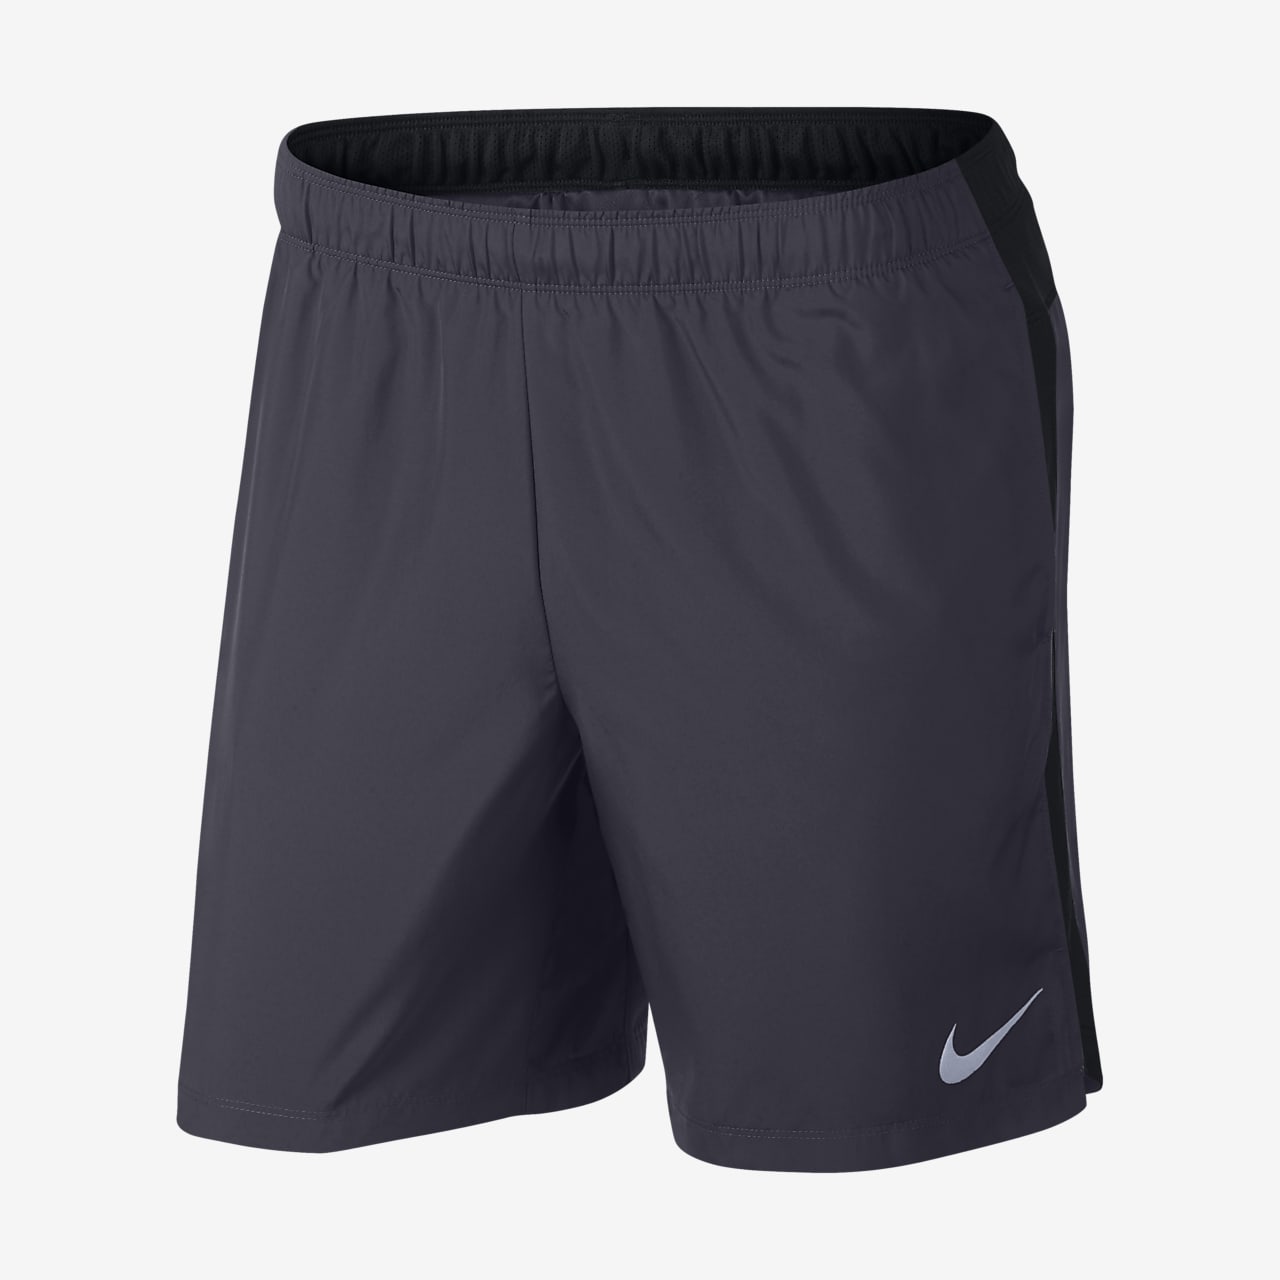 Agitation ungebraucht Merchandising nike 7 inch running shorts ...